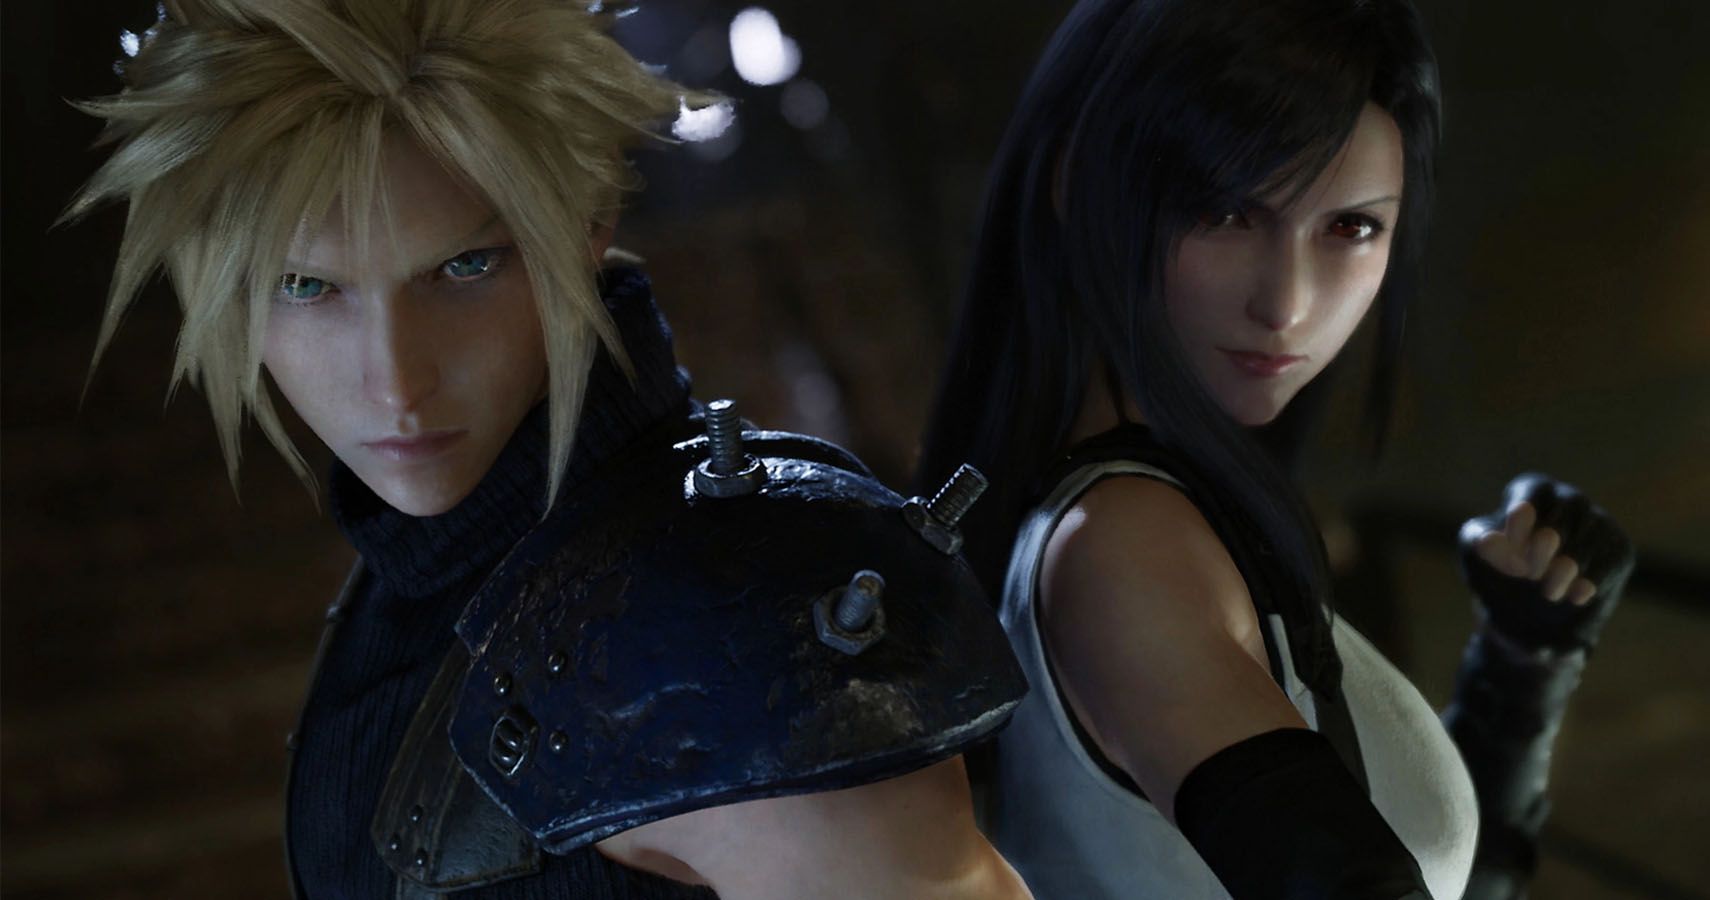 Final Fantasy 7 Remake Top 10 Characters Ranked